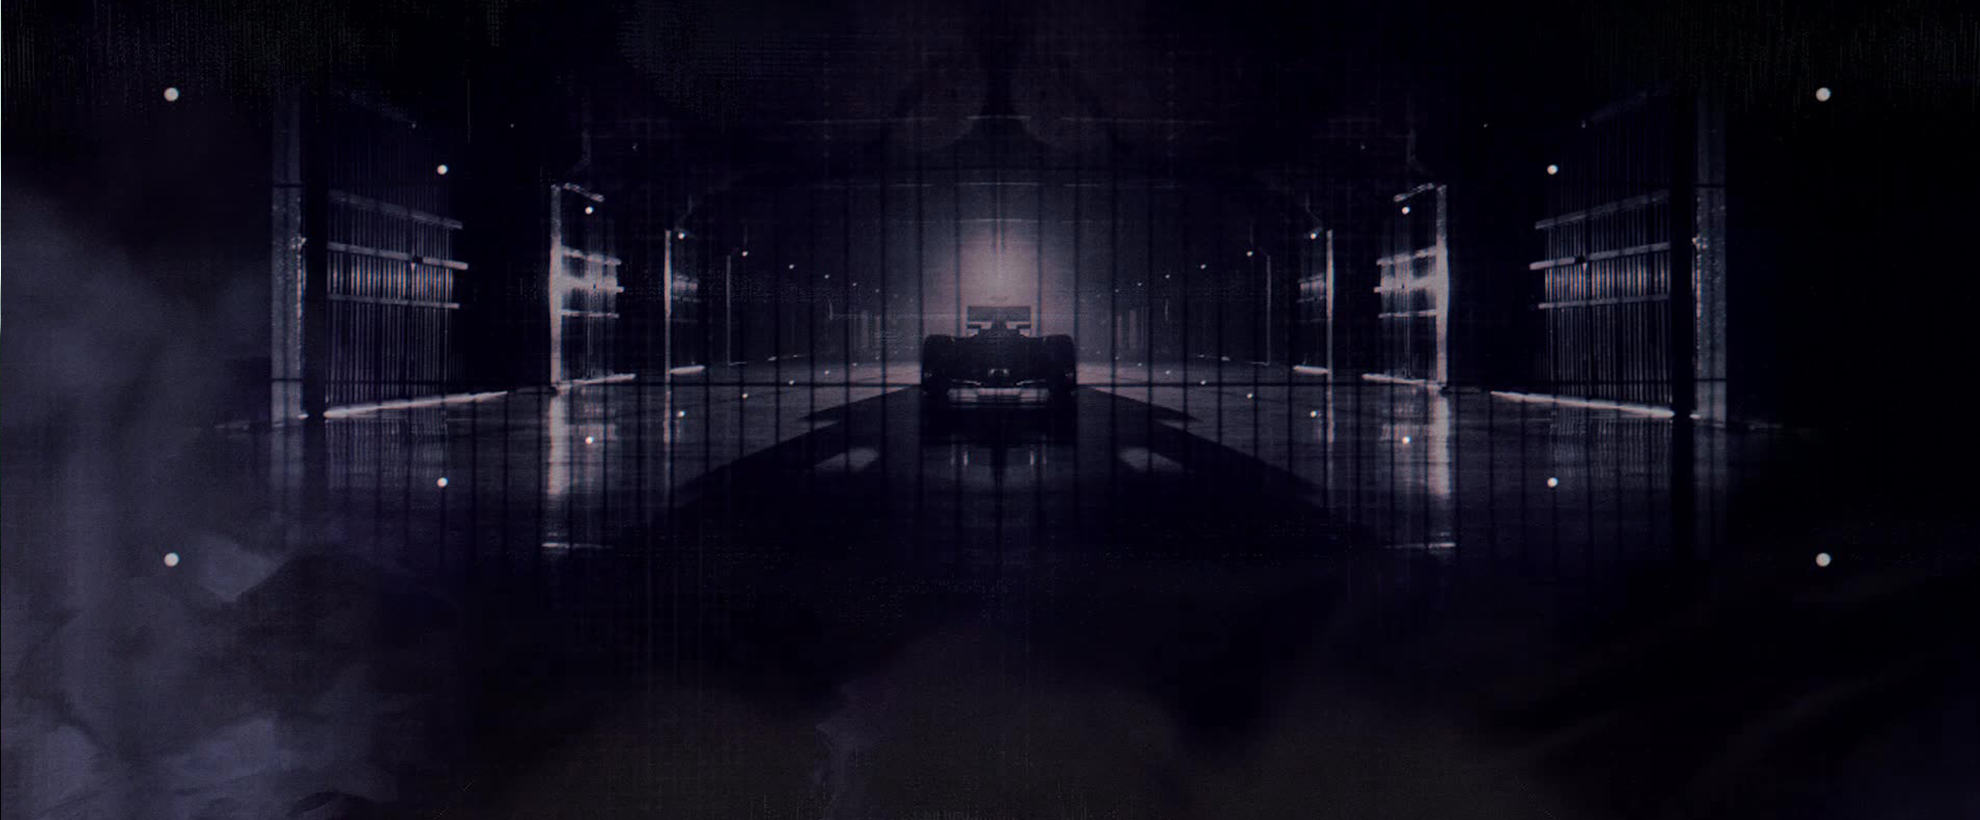 The silhouette of a formula 1 race car in a dark garage